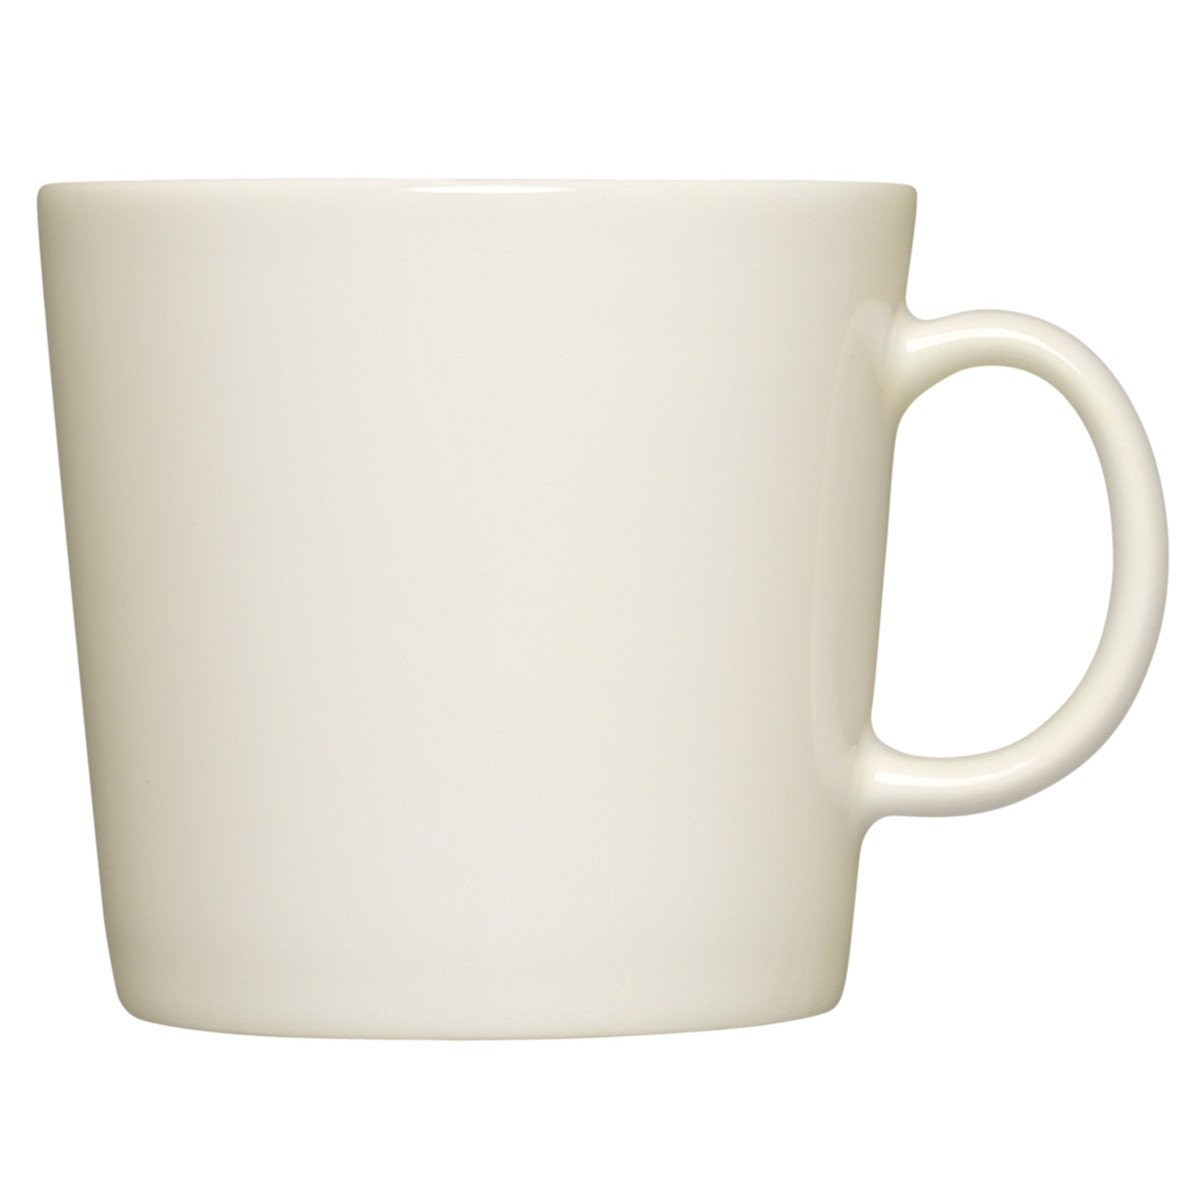 0.4l - Teema mug - white - 1005467